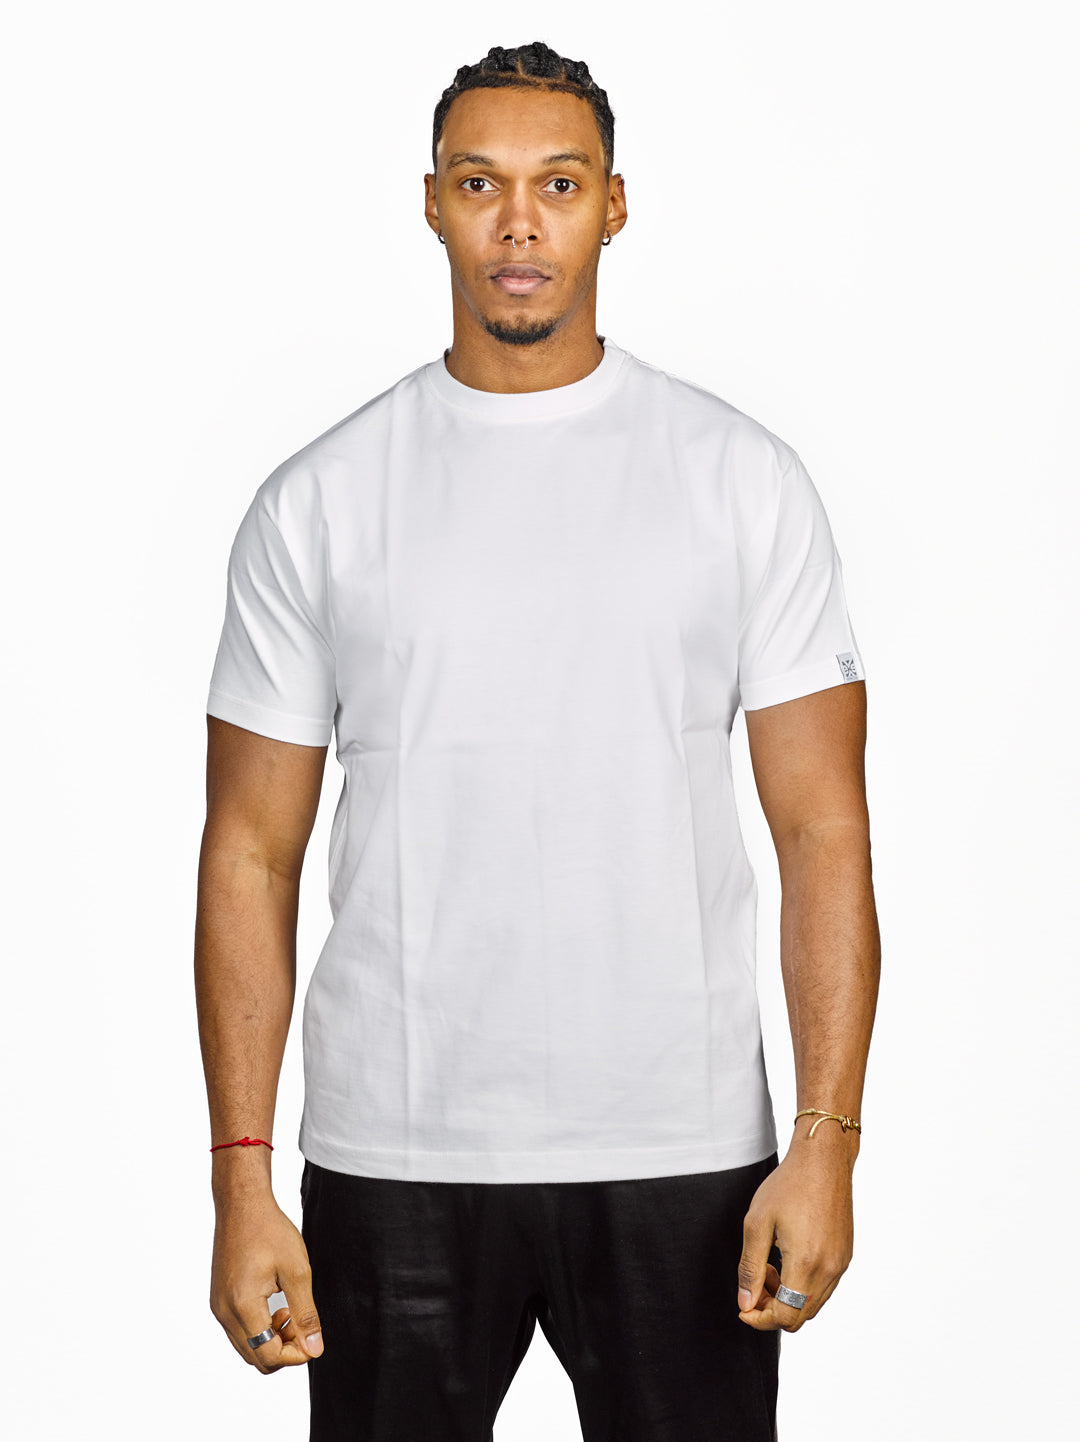 Exetees Plain Regular Round Neck T-Shirt - White